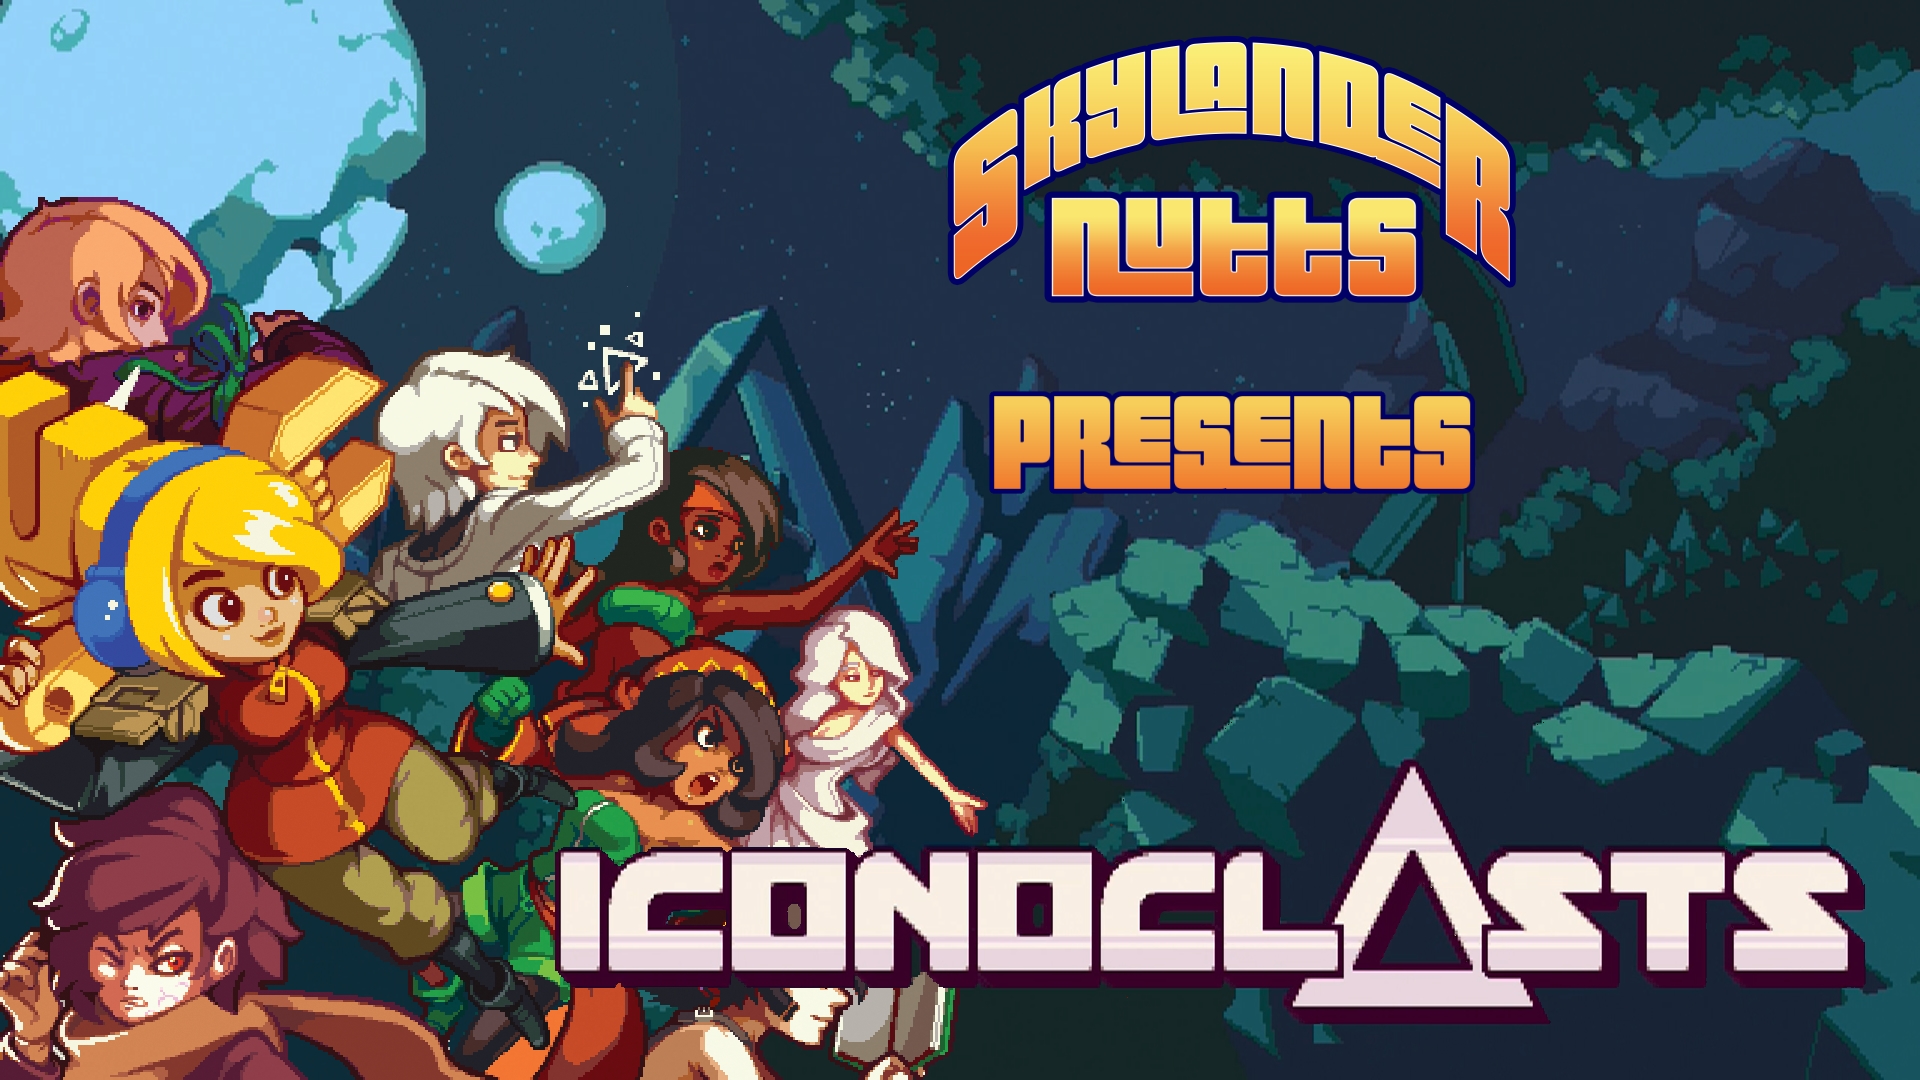 SkylanderNutts Presents Iconoclasts